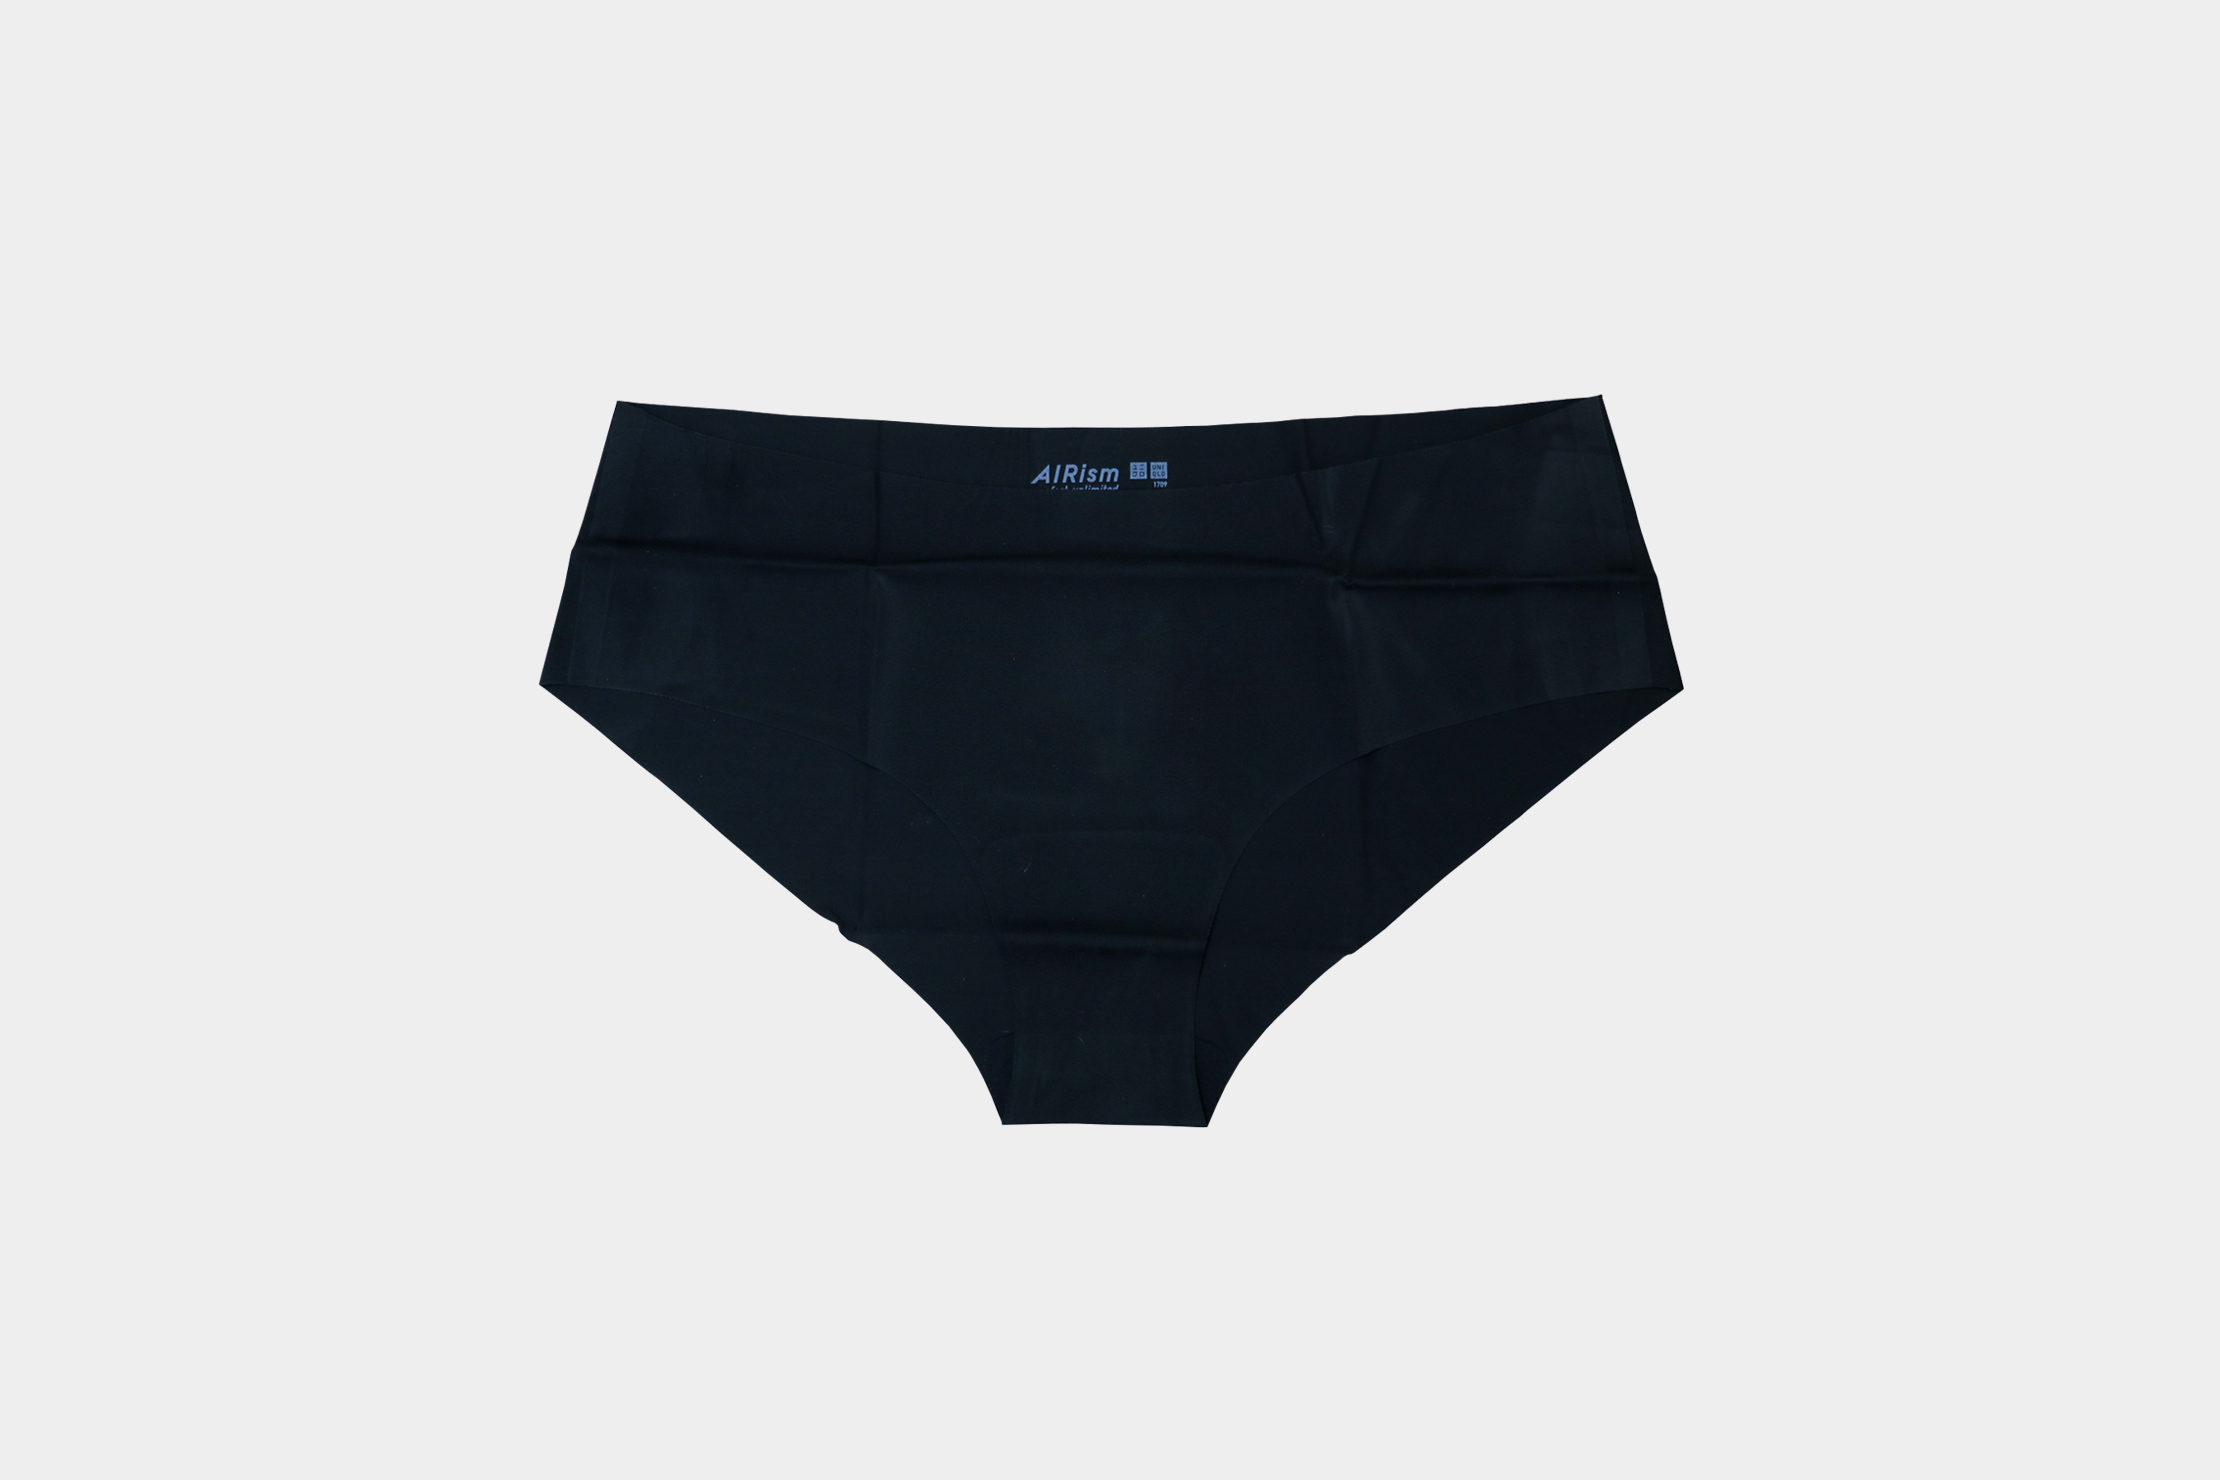 UNIQLO AIRism Ultra Seamless Boxer Briefs 4 Colors S-4XL Low Rise Men  Underwear